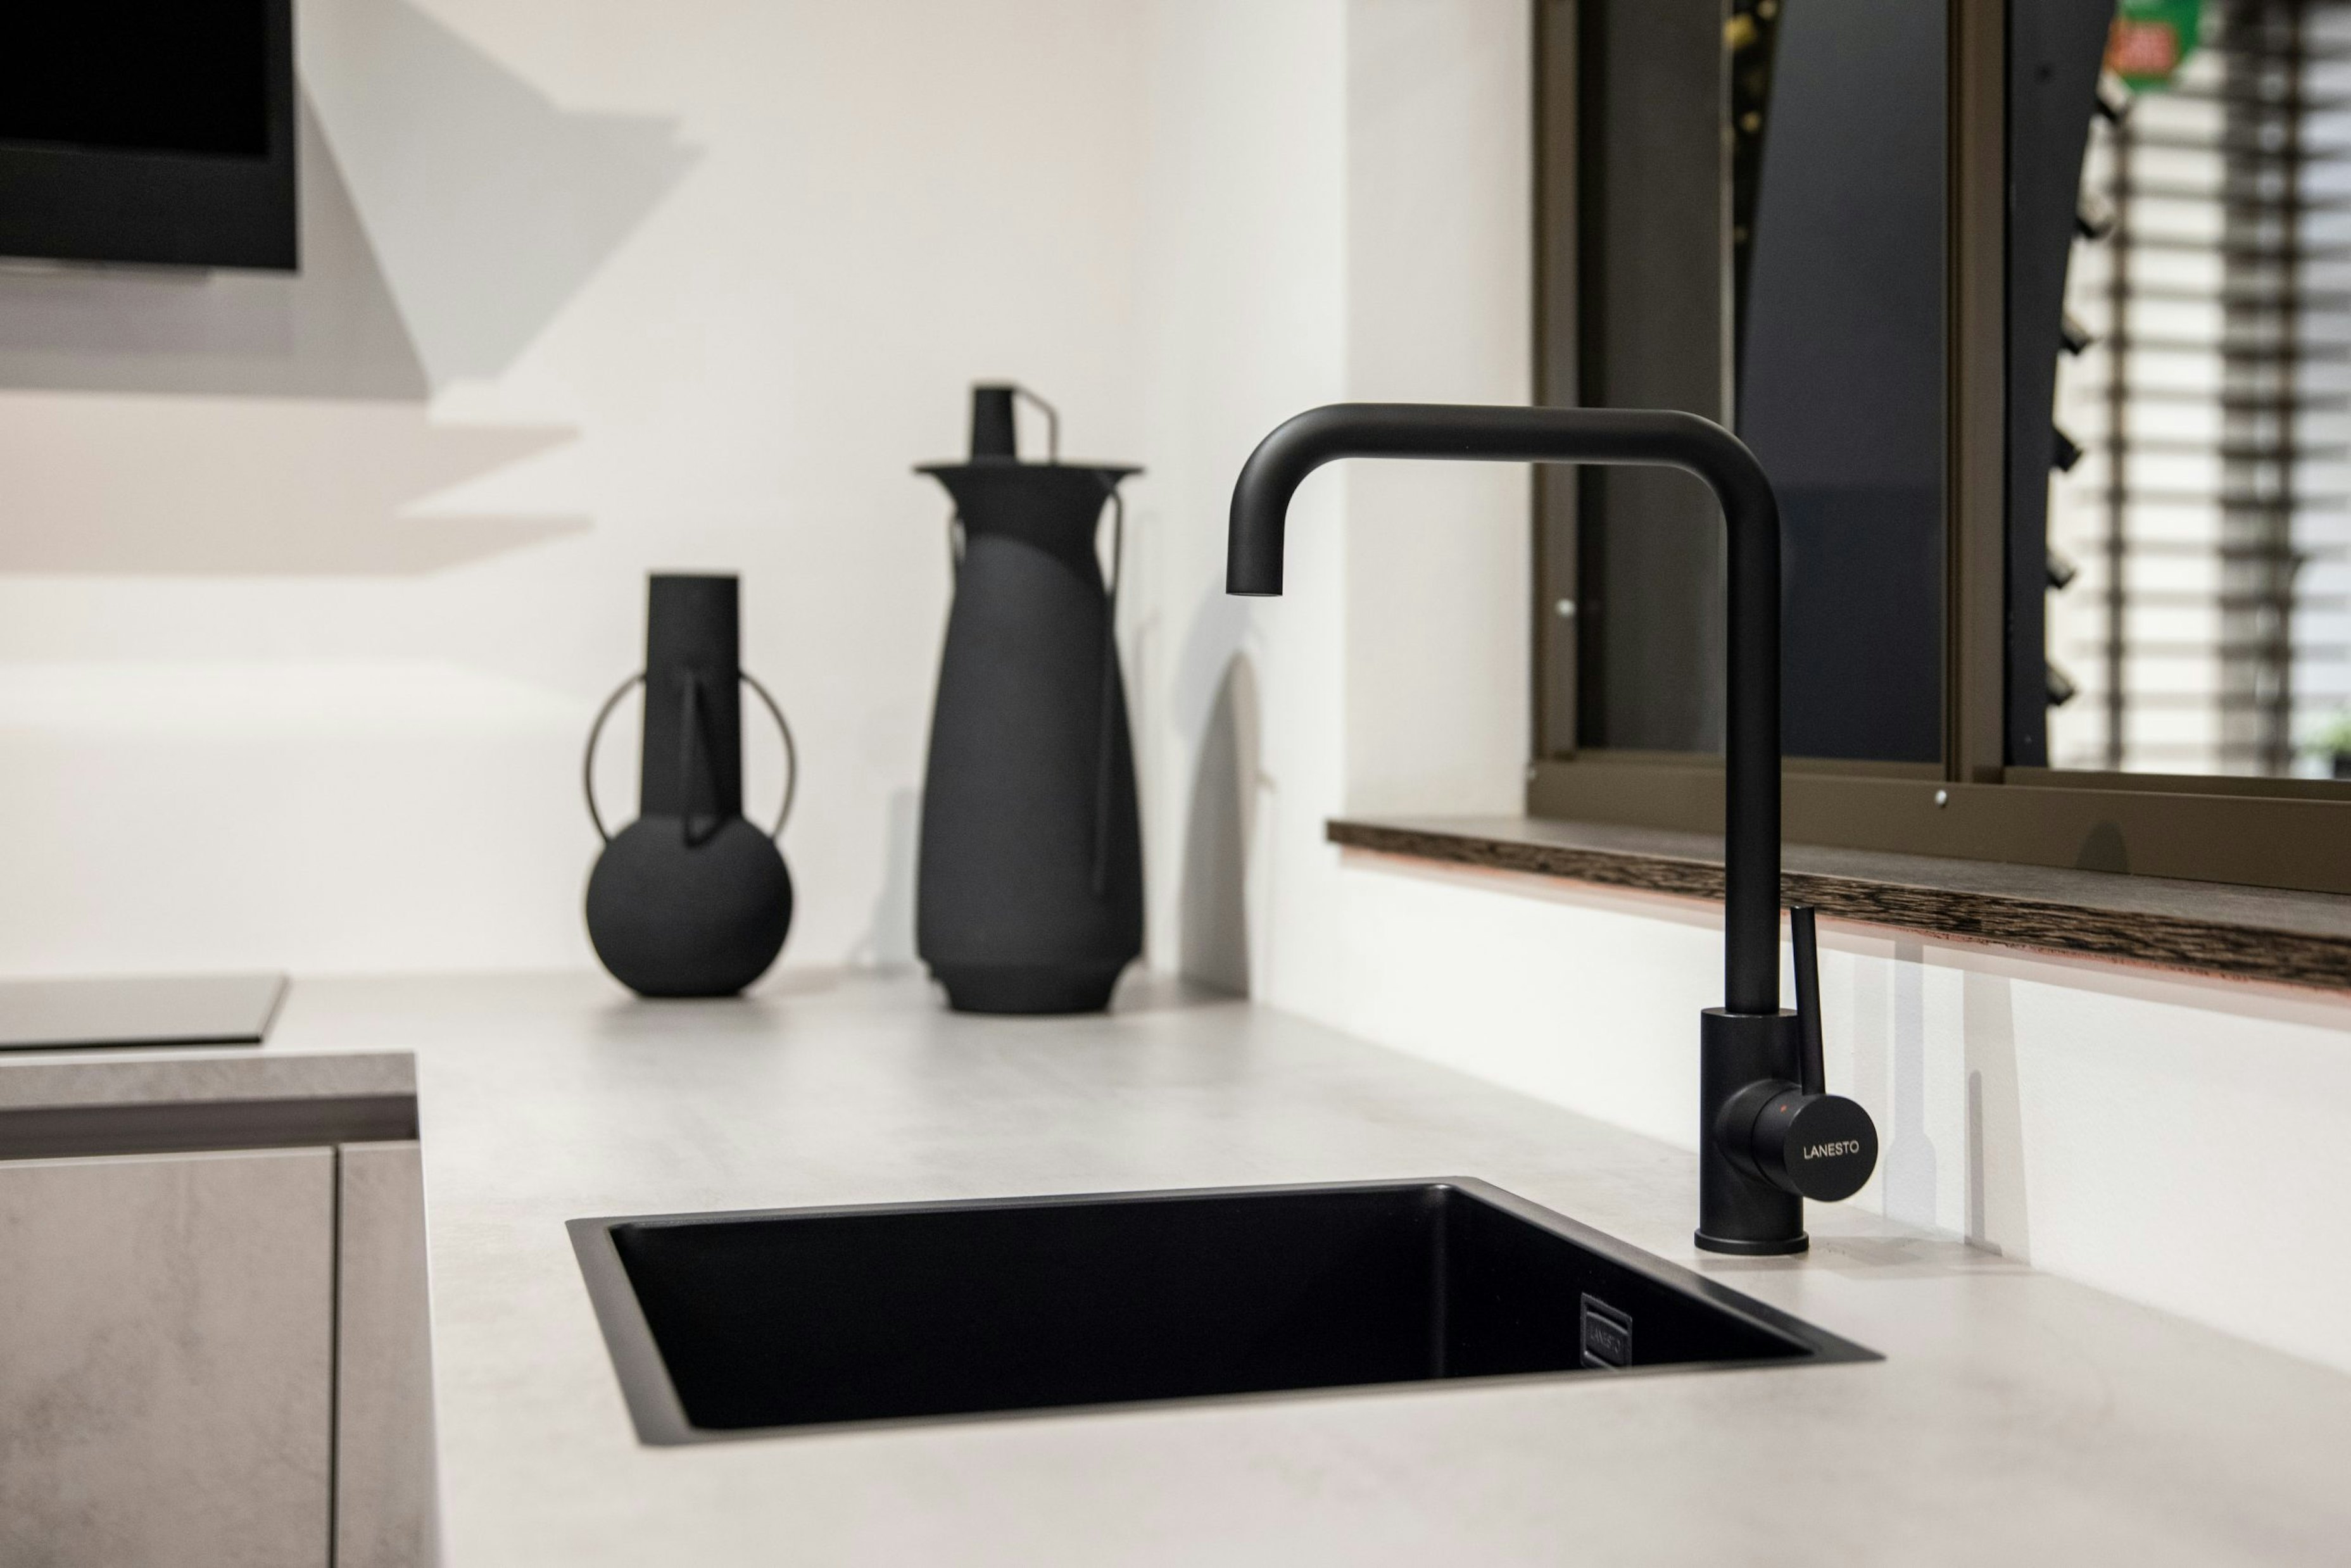 De mat zwarte keukenkraan en in zwart uitgevoerde spoelbak - Bemmel & Kroon keukens